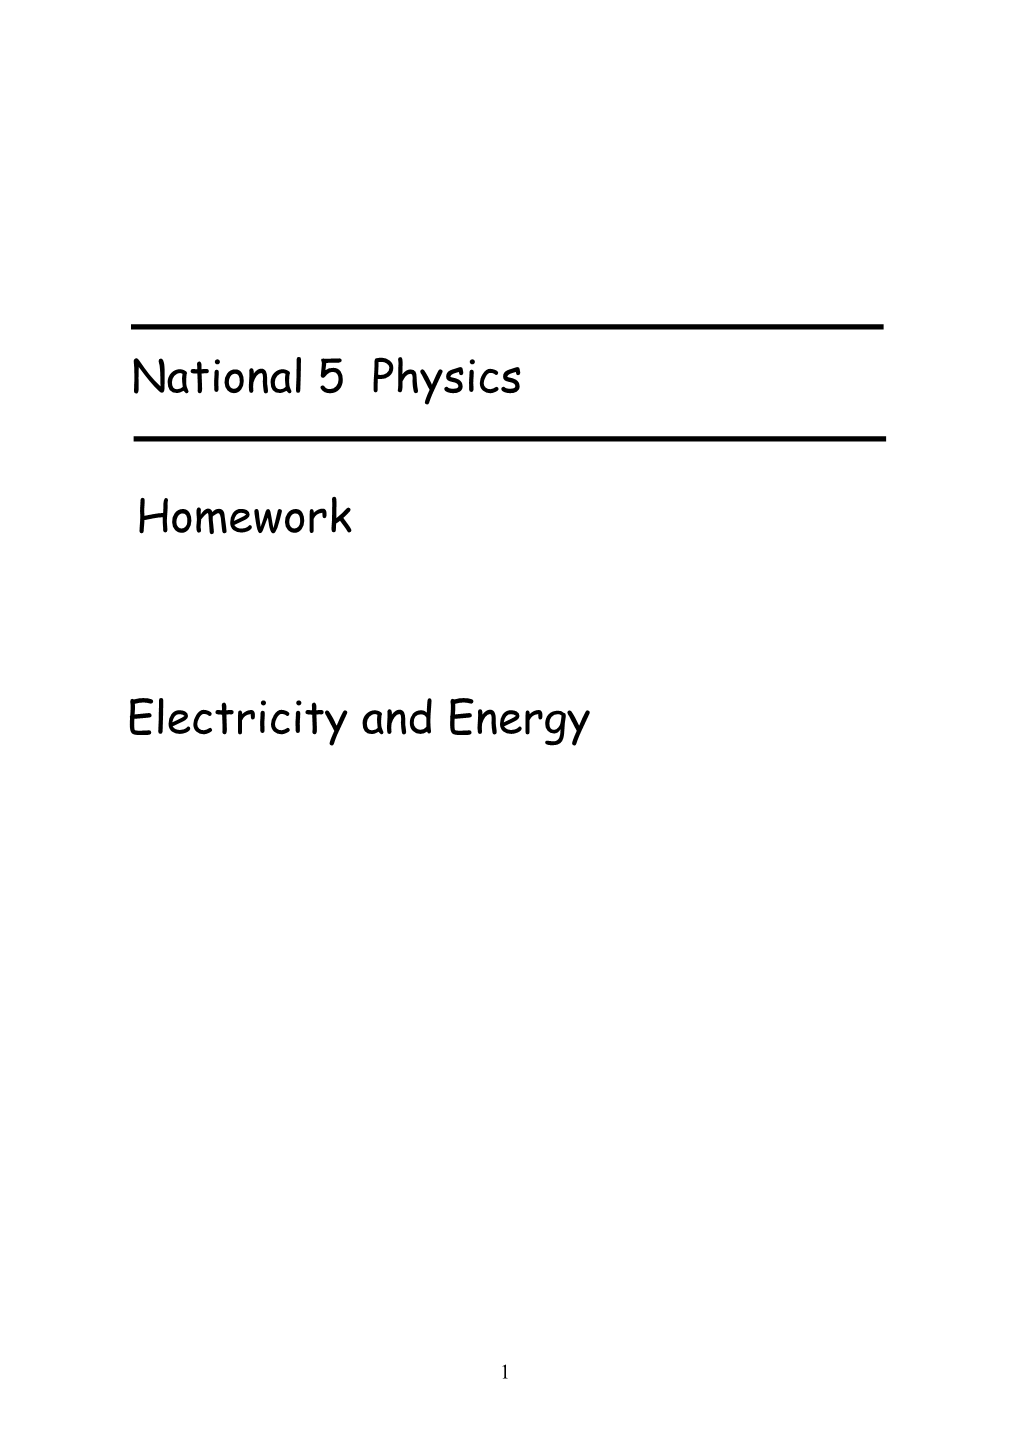 Electricity & Energy 1 Homework 1